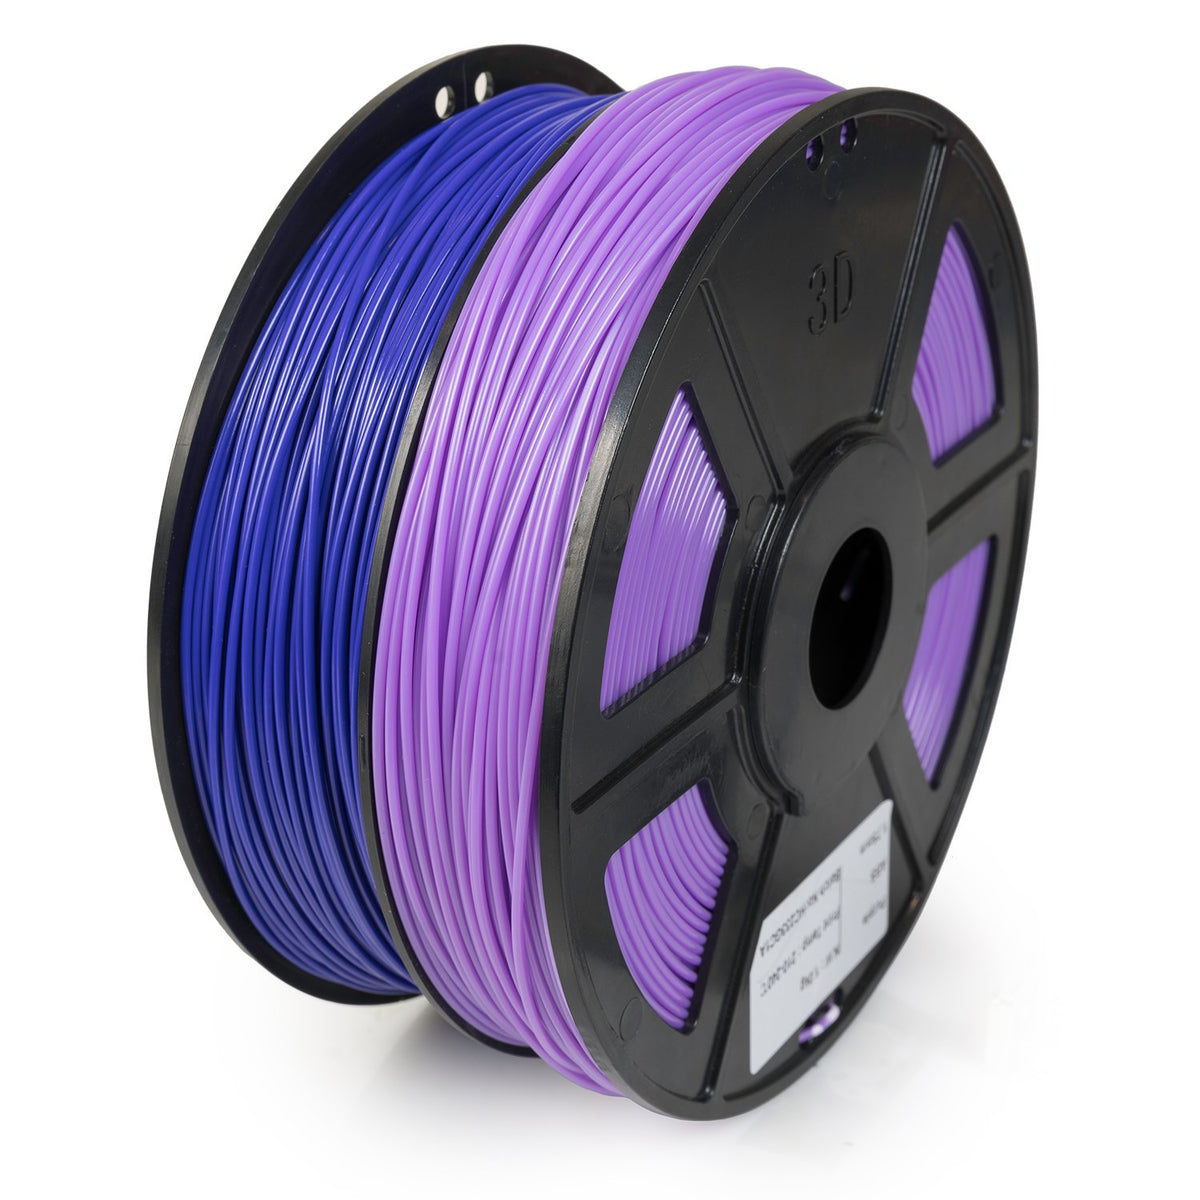 WYZworks PLA 1.75mm Premium Thermoplastic Polylactic Acid 3D Printer Filament - Dimensional Accuracy +/- 0.05mm 1kg / 2.2lb [ Multiple Color Options Available ] (Purple & Violet)